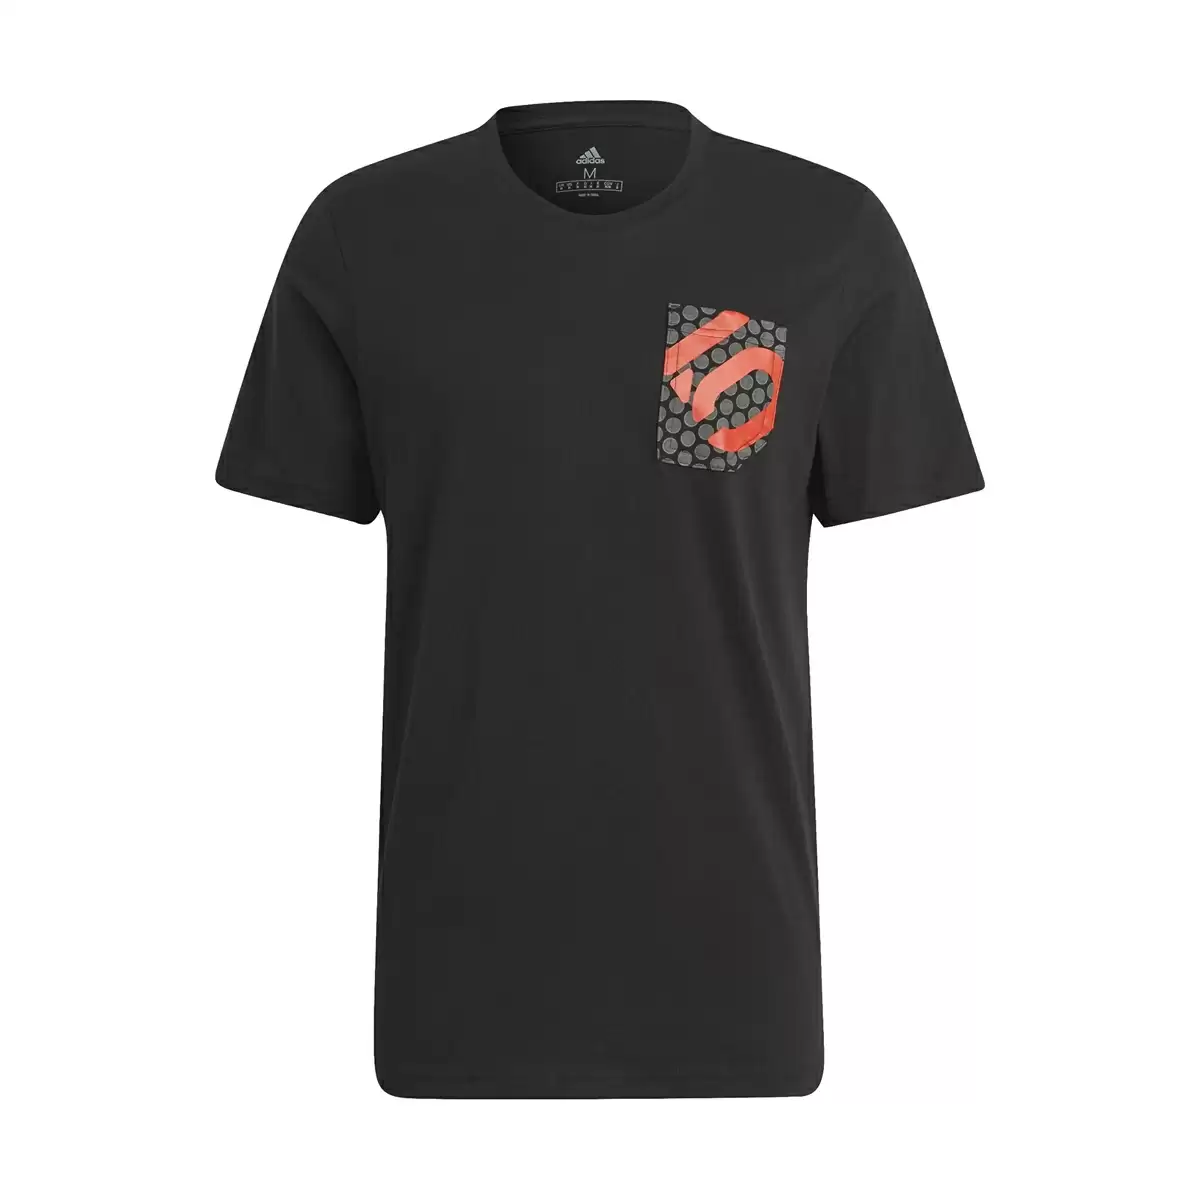 5.10 BOTB Brand of The Brave Camiseta Negra 2021 Talla M - image